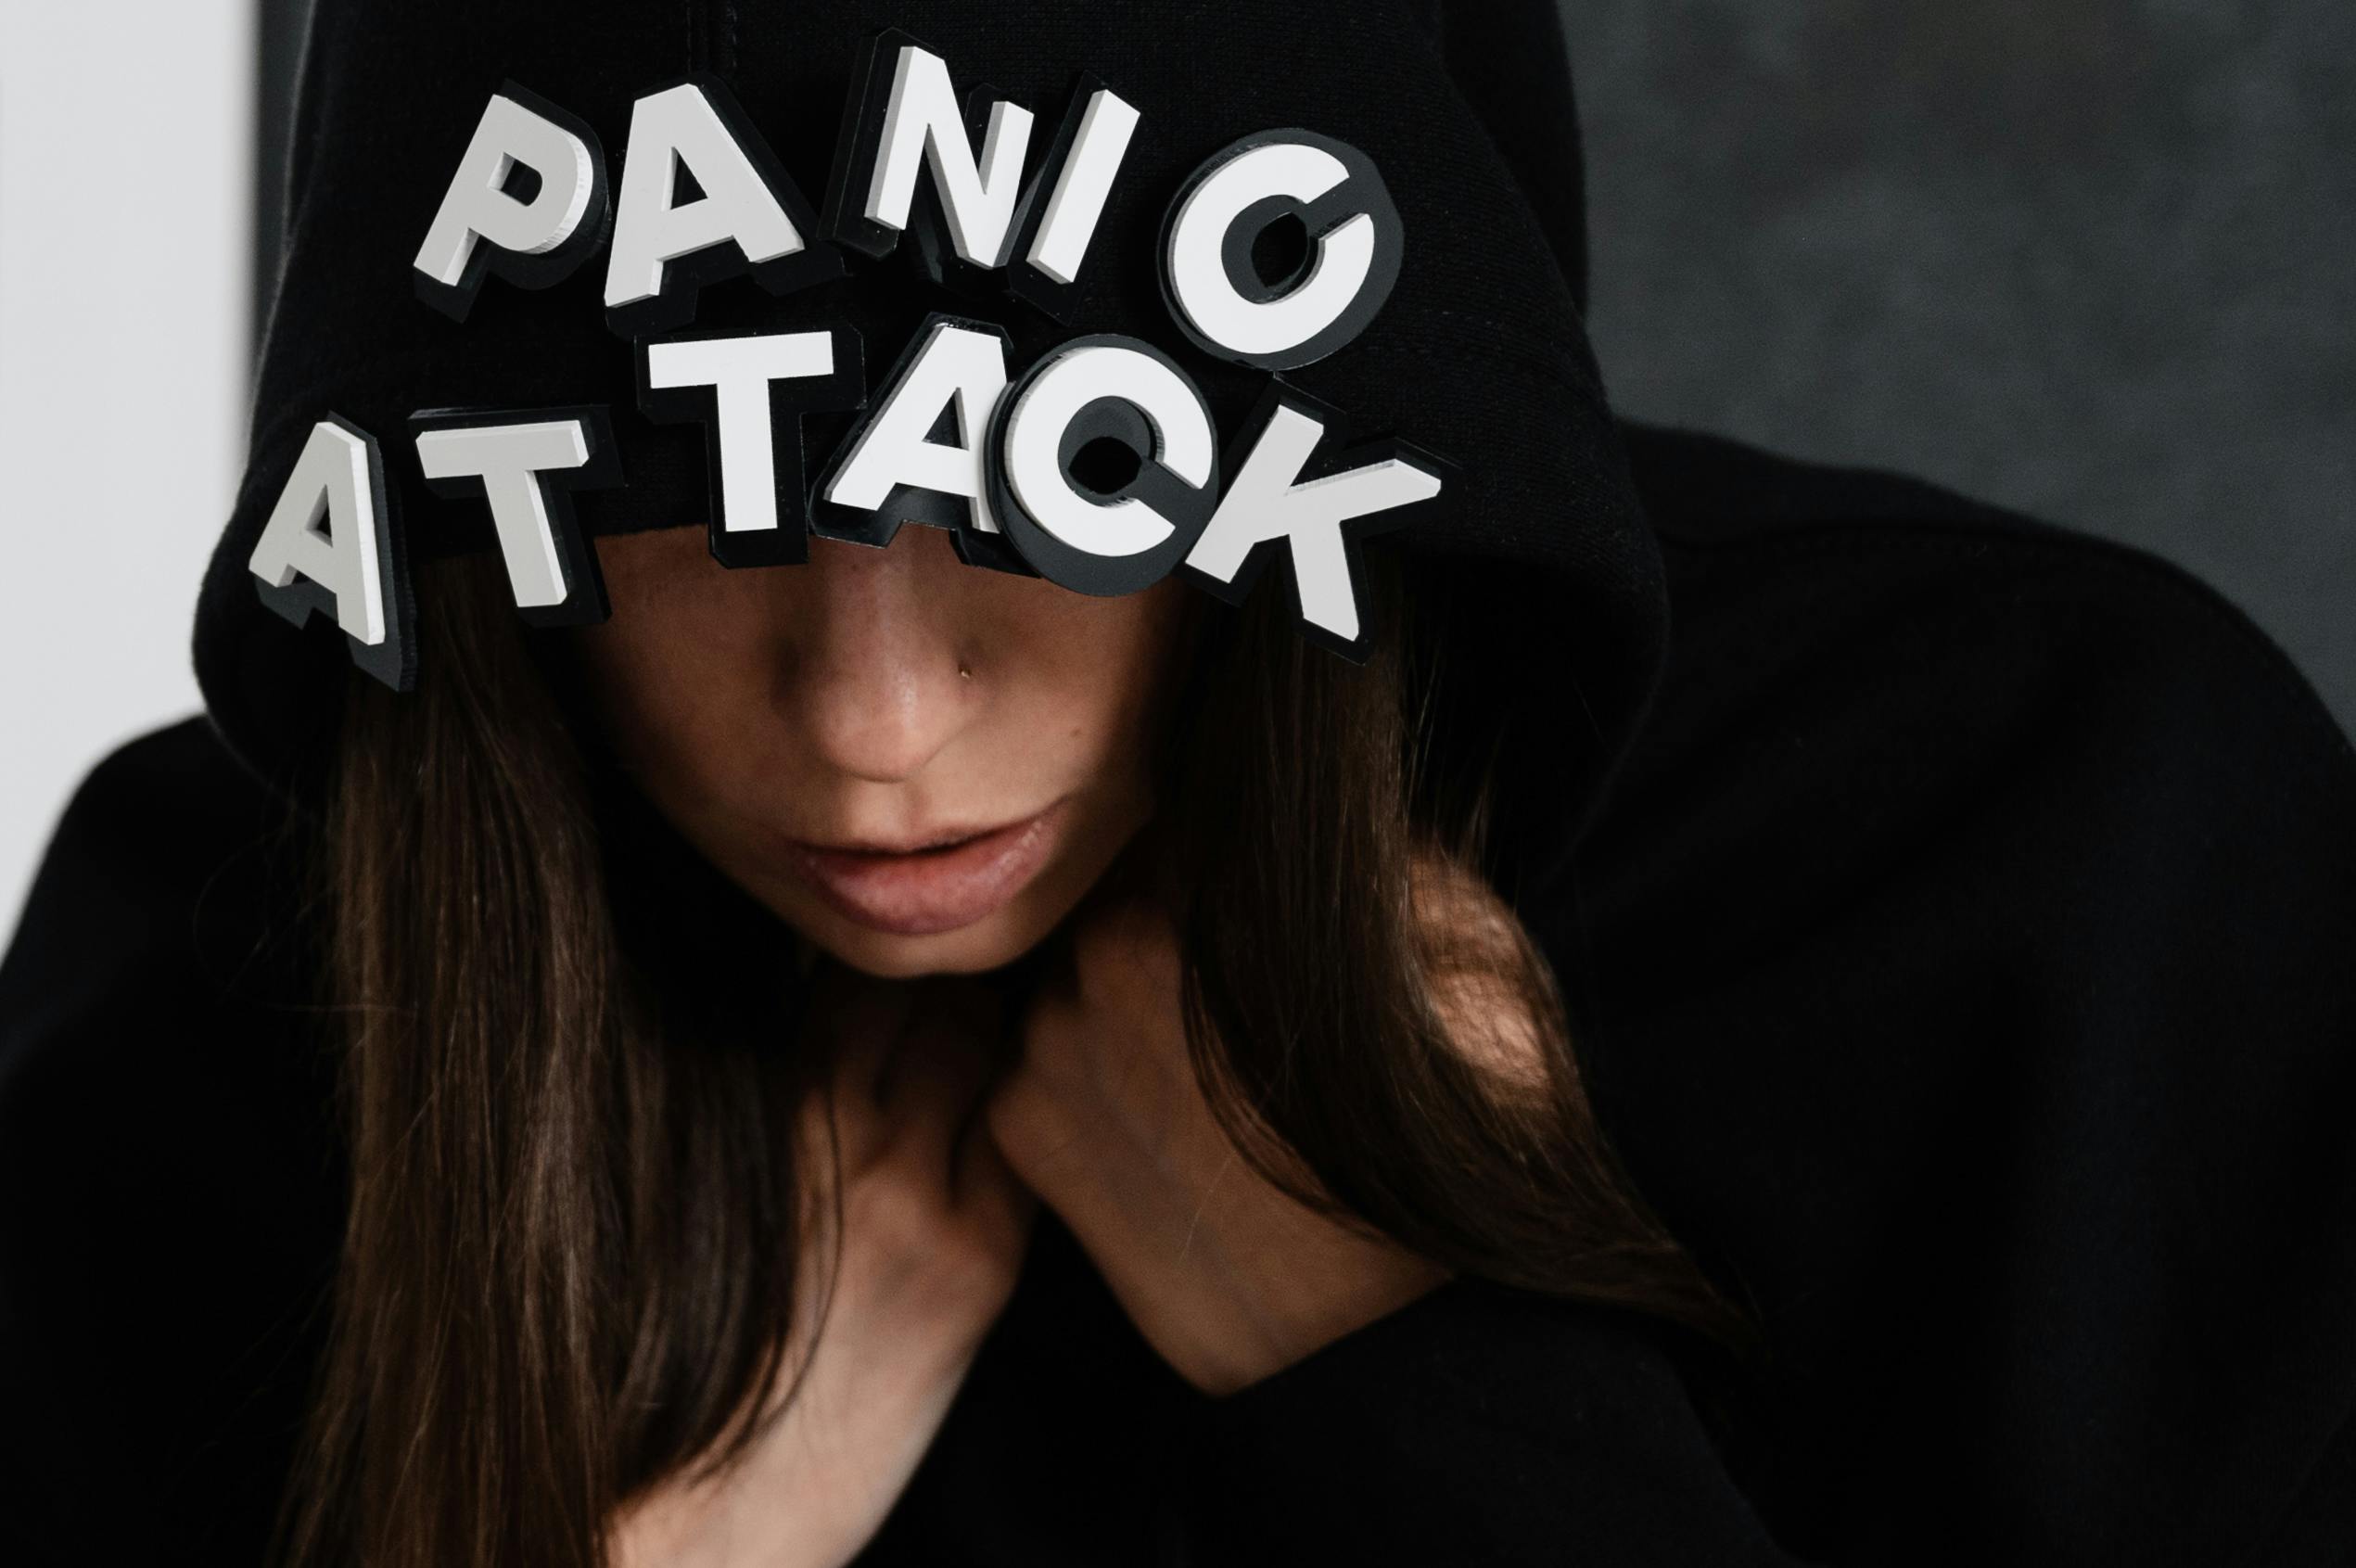 What causes panic attacks?